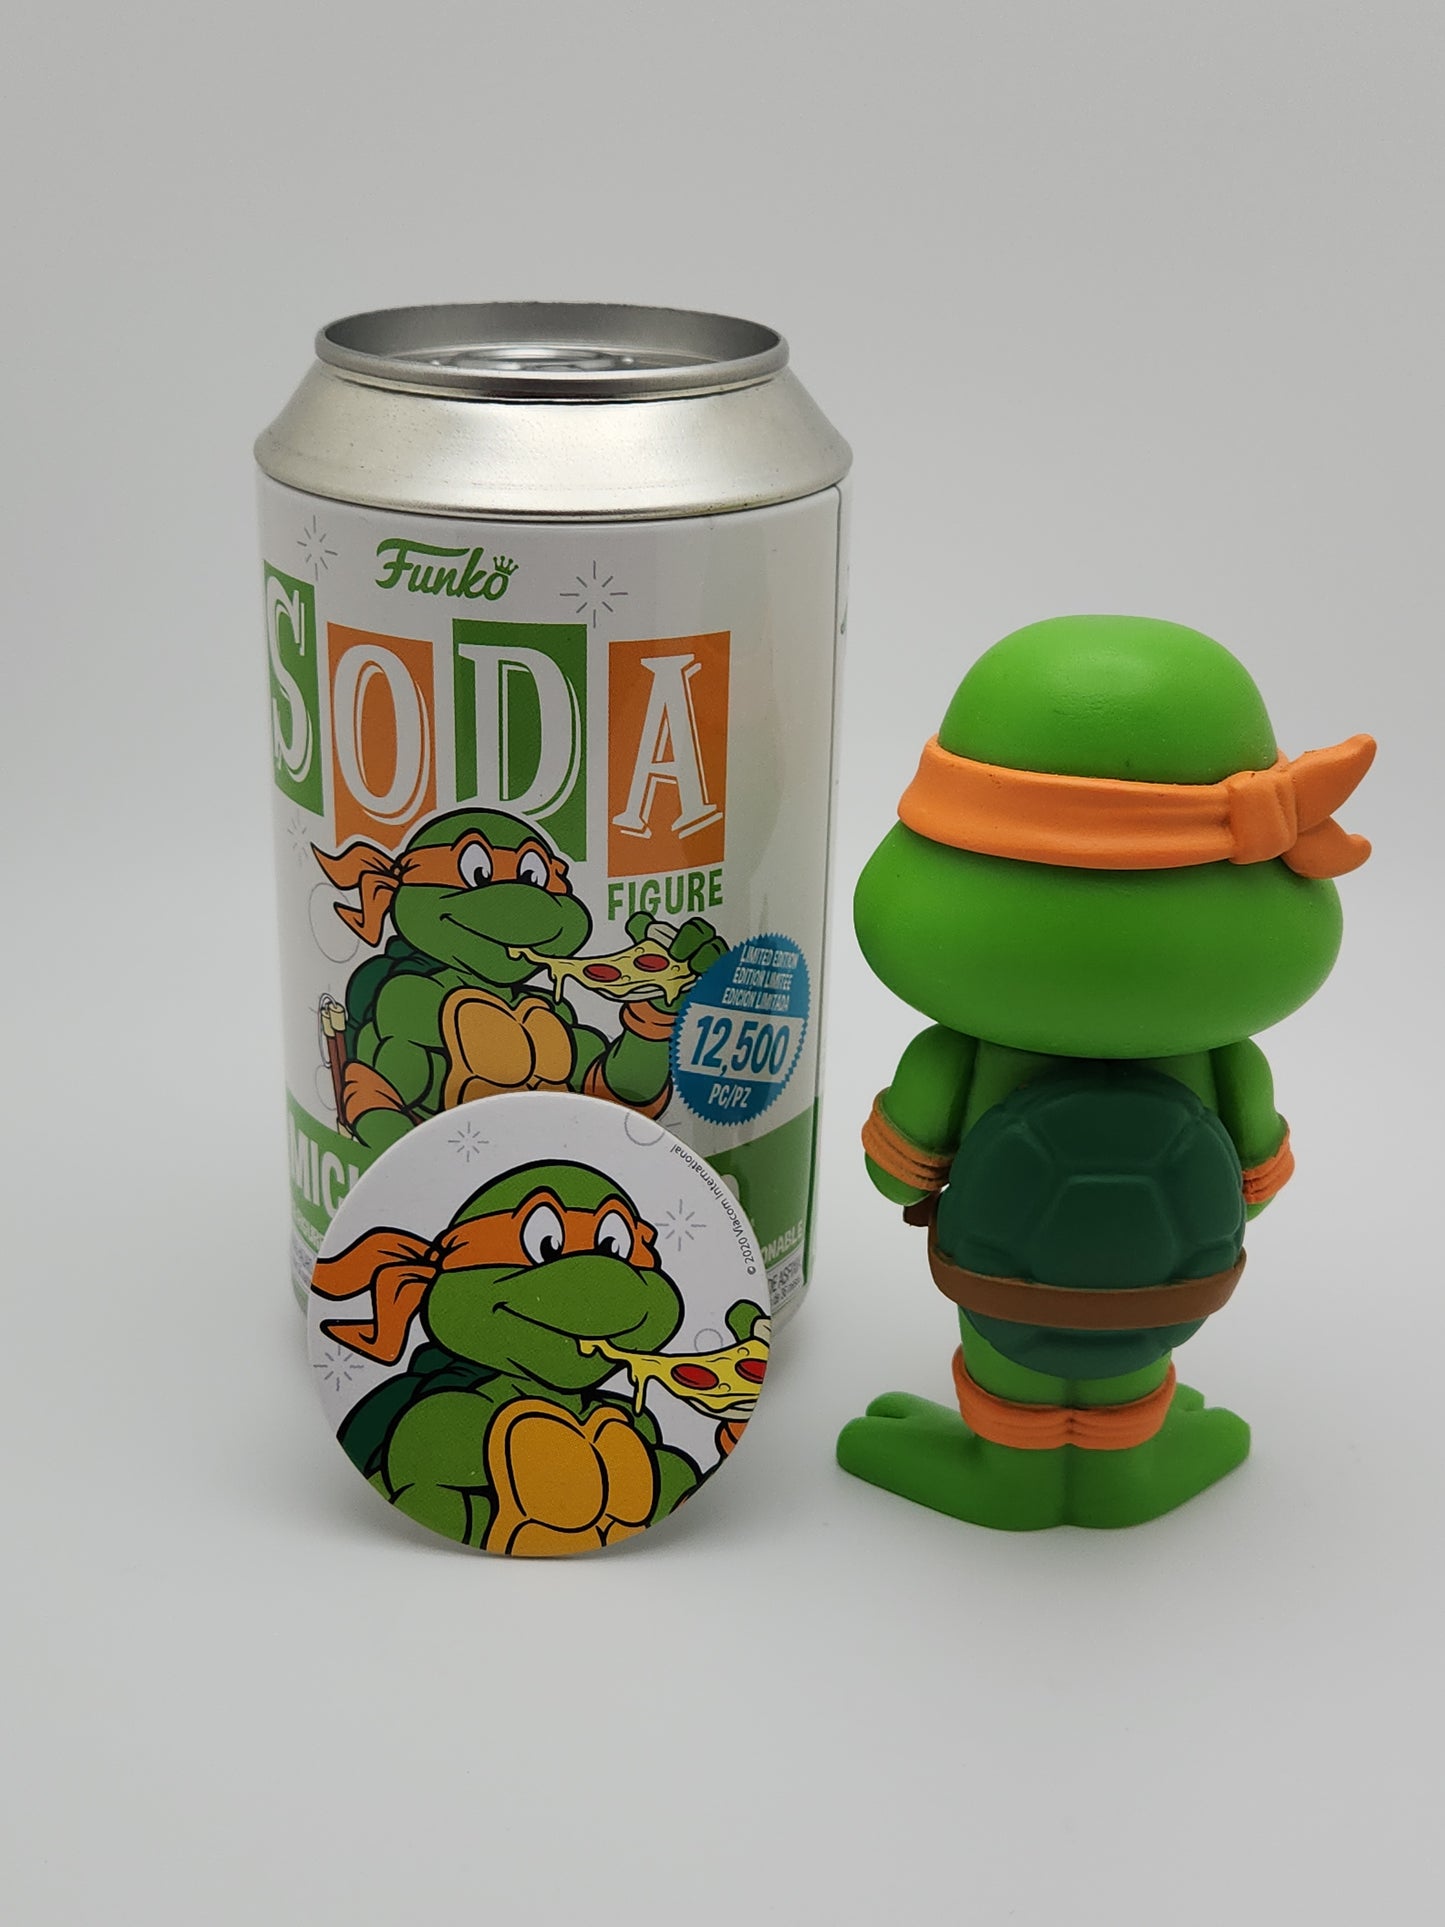 Funko Soda- Michelangelo